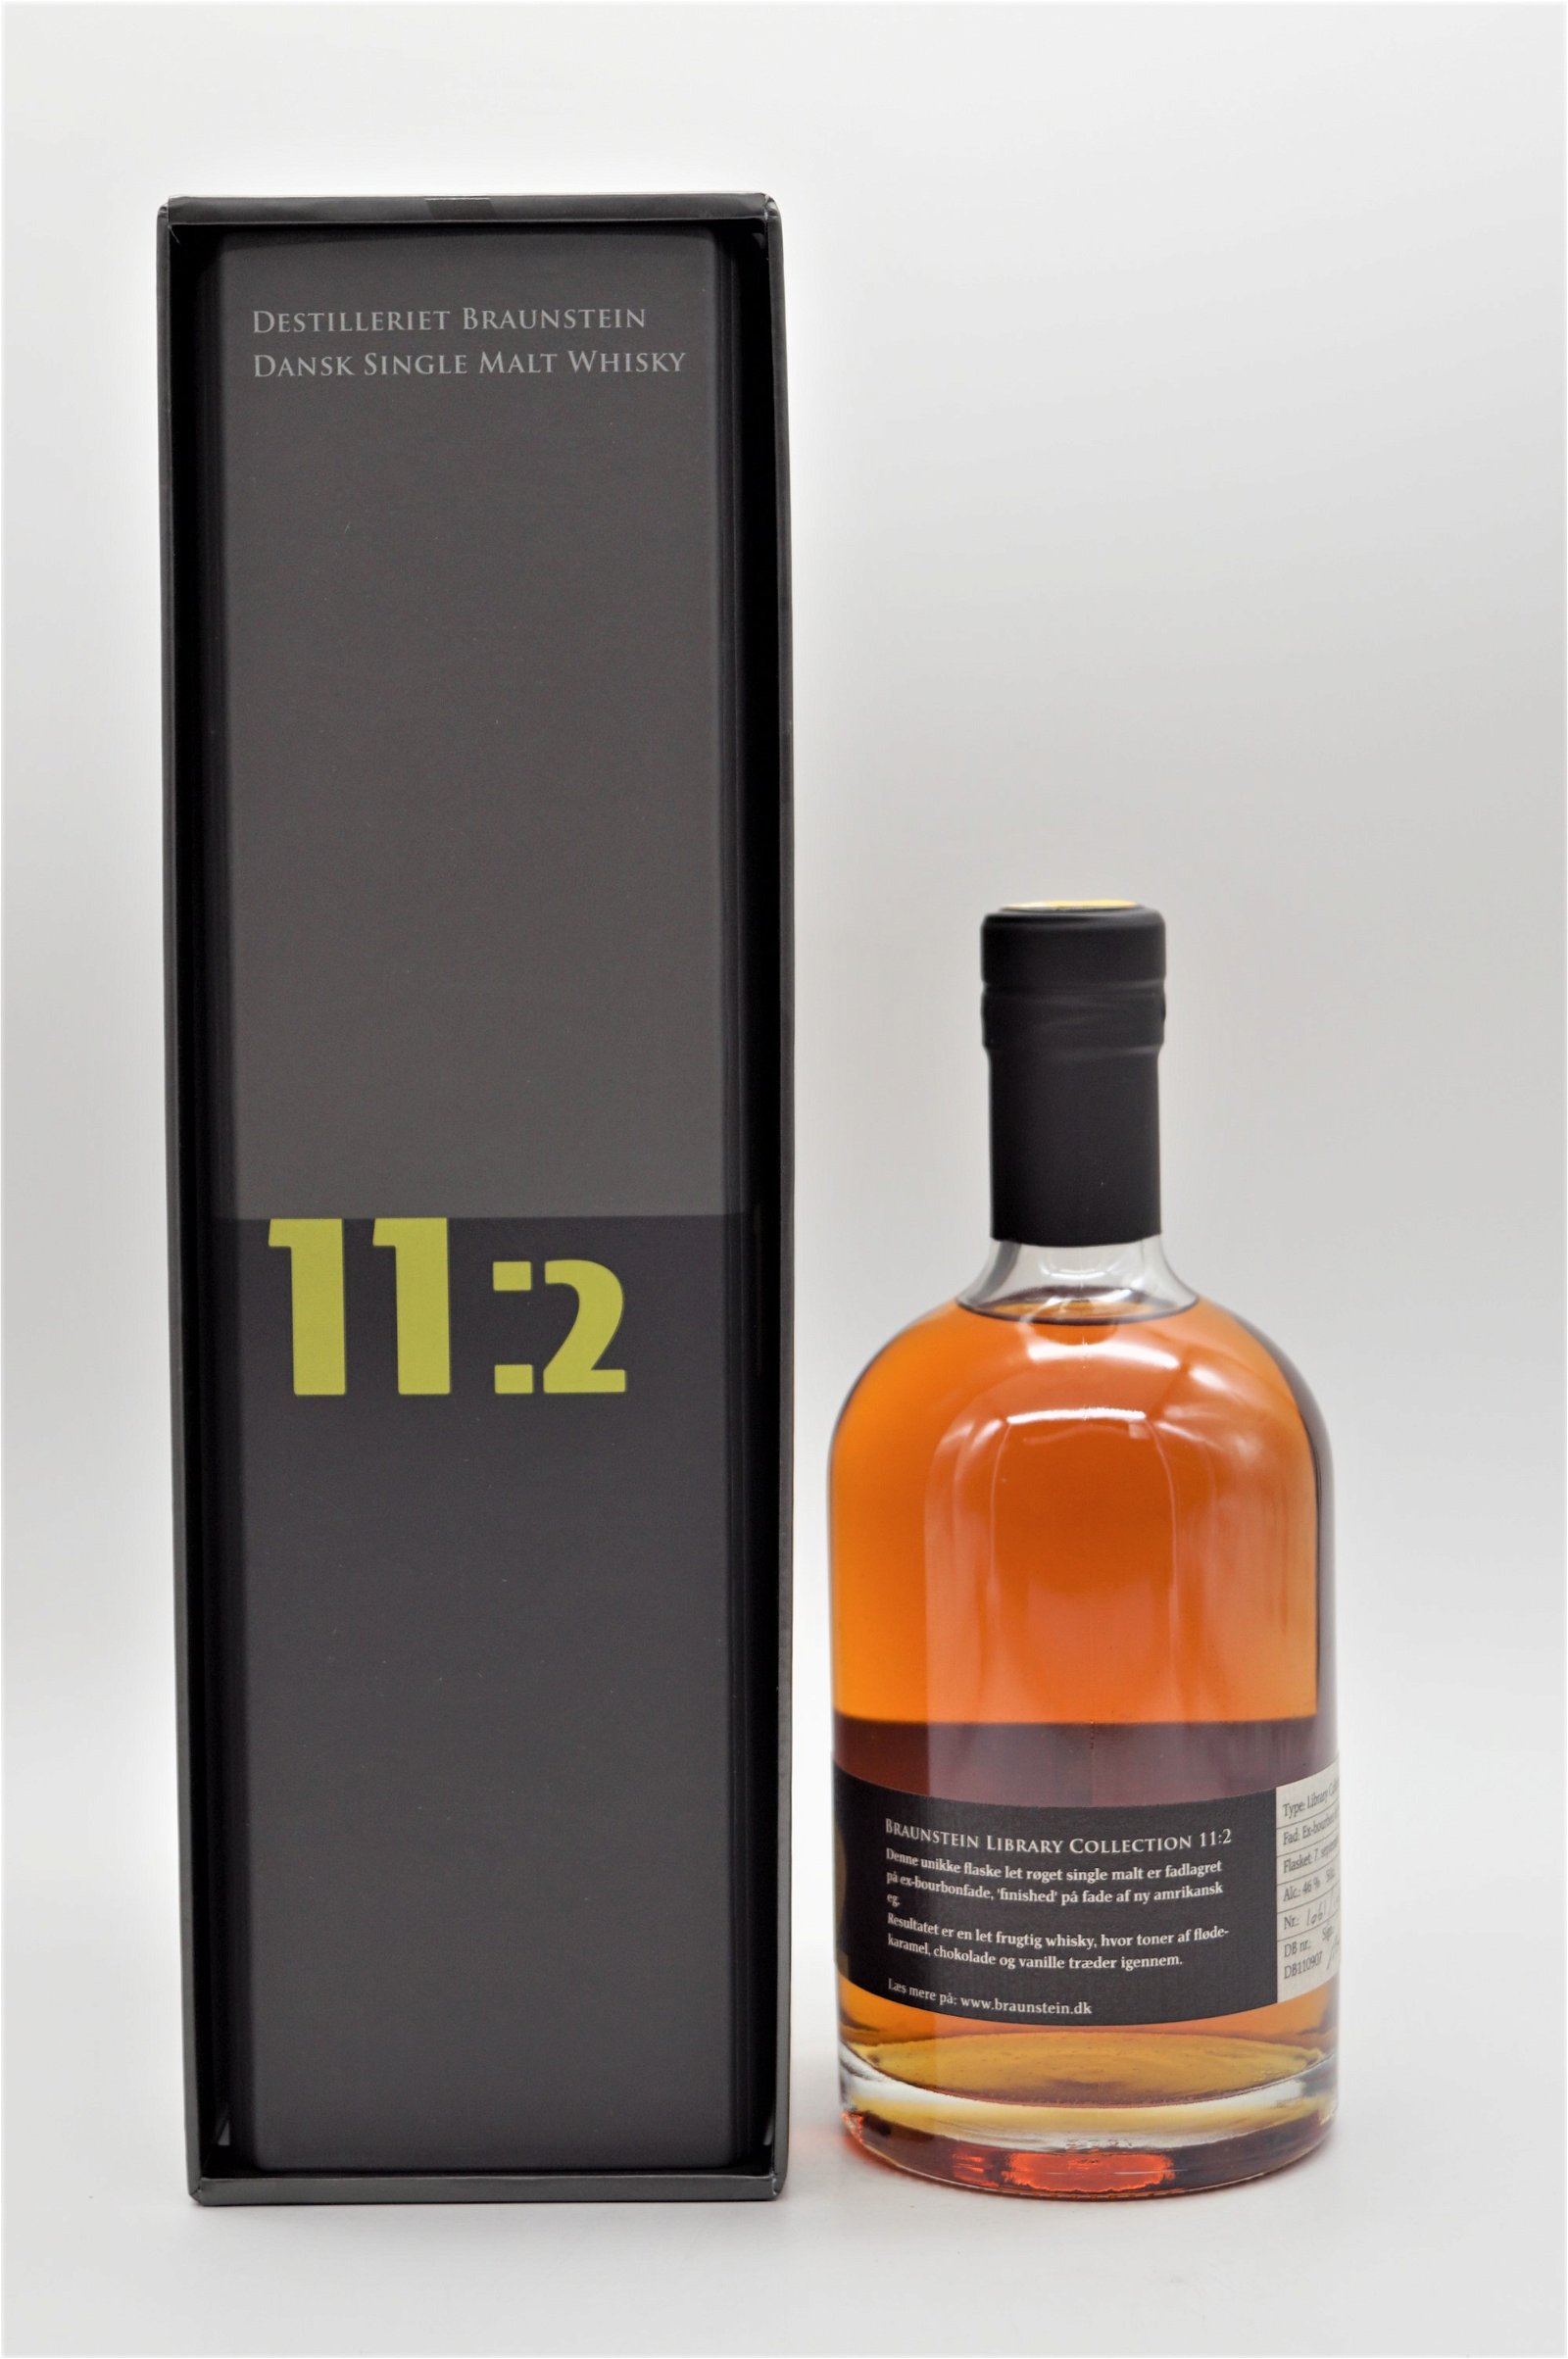 Braunstein Libary Collection 11:2 Dansk Single Malt Whisky